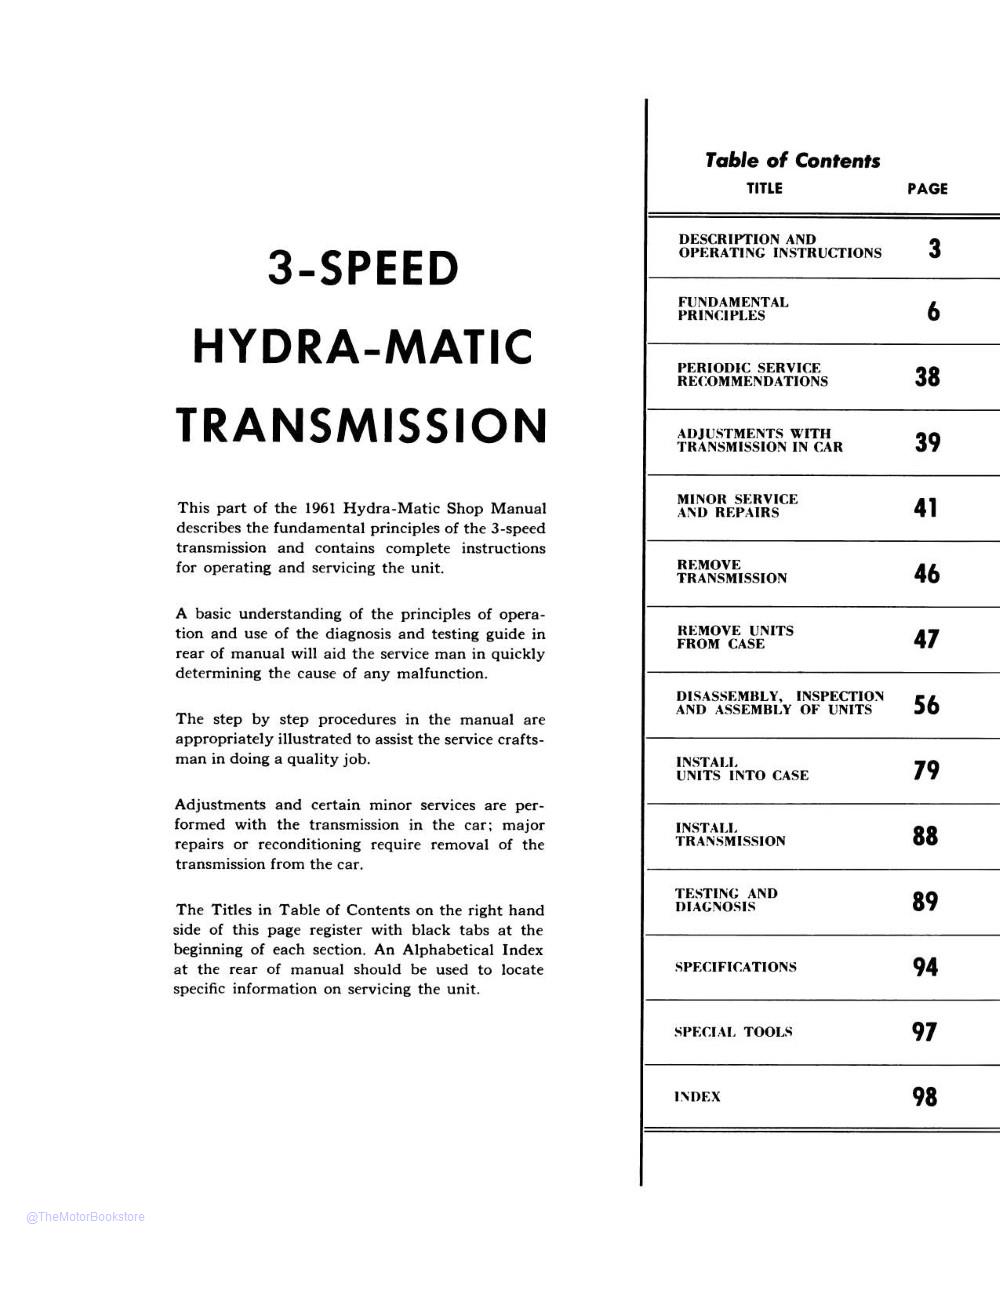 1961 Pontiac Hydra-Matic Shop Manual  - Table of Contents